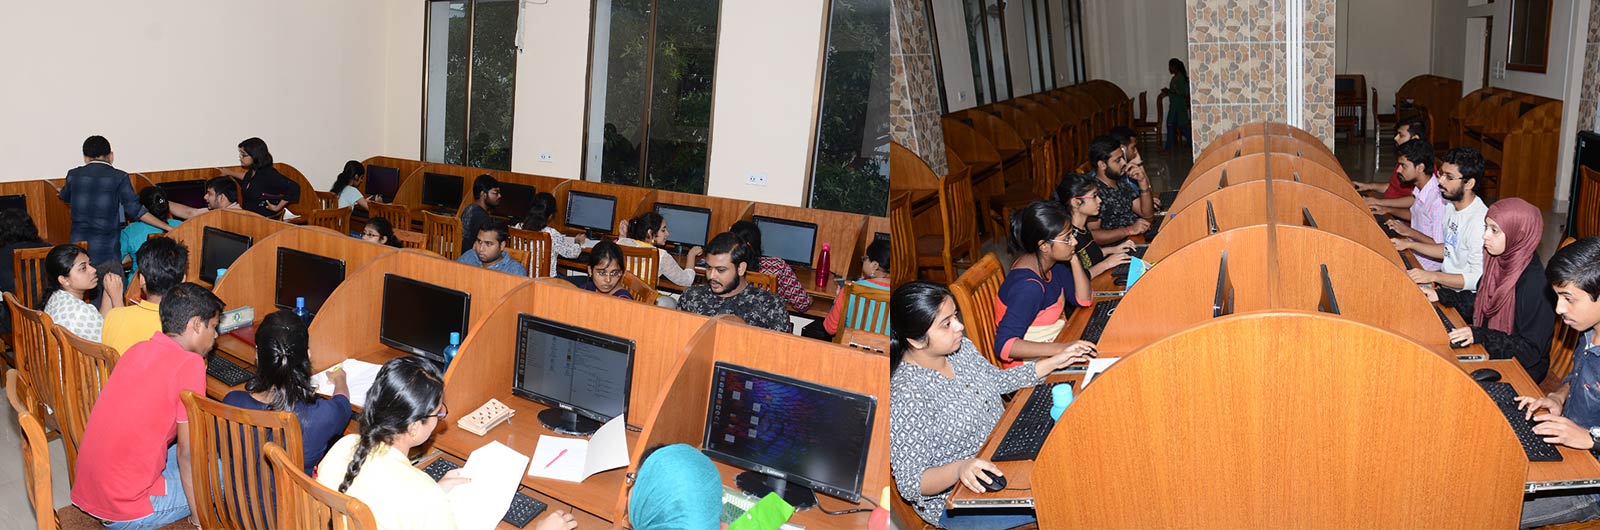 Calcutta University Rajabajar-Campus-Library